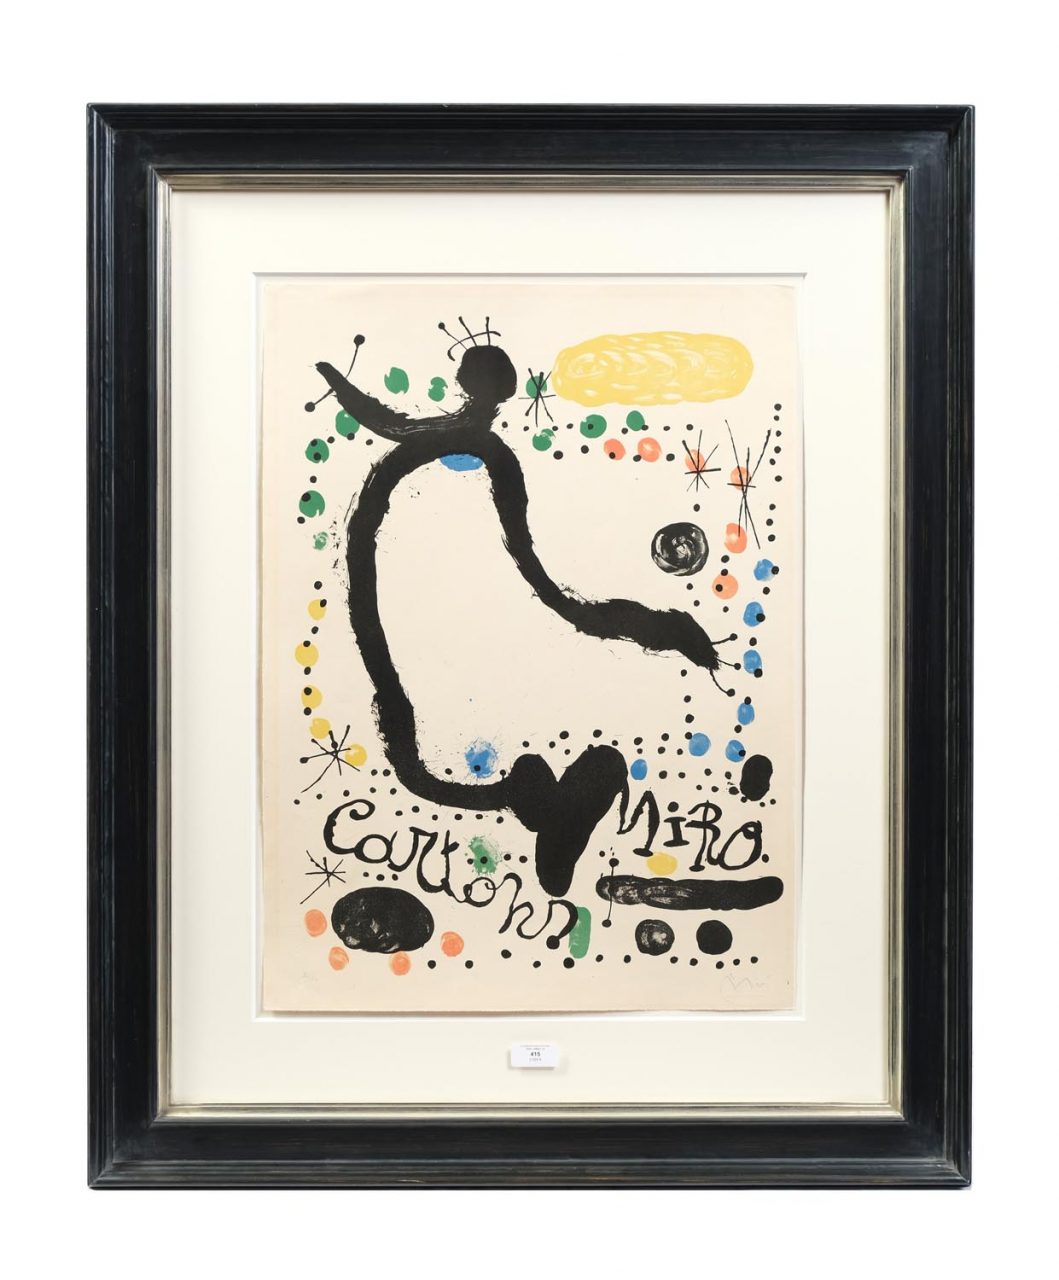 Joan Miró 1893 - 1983 Original Lithographie zur Ausstellung "Miro Carones", 1965 Galerie Maeght, Paris 